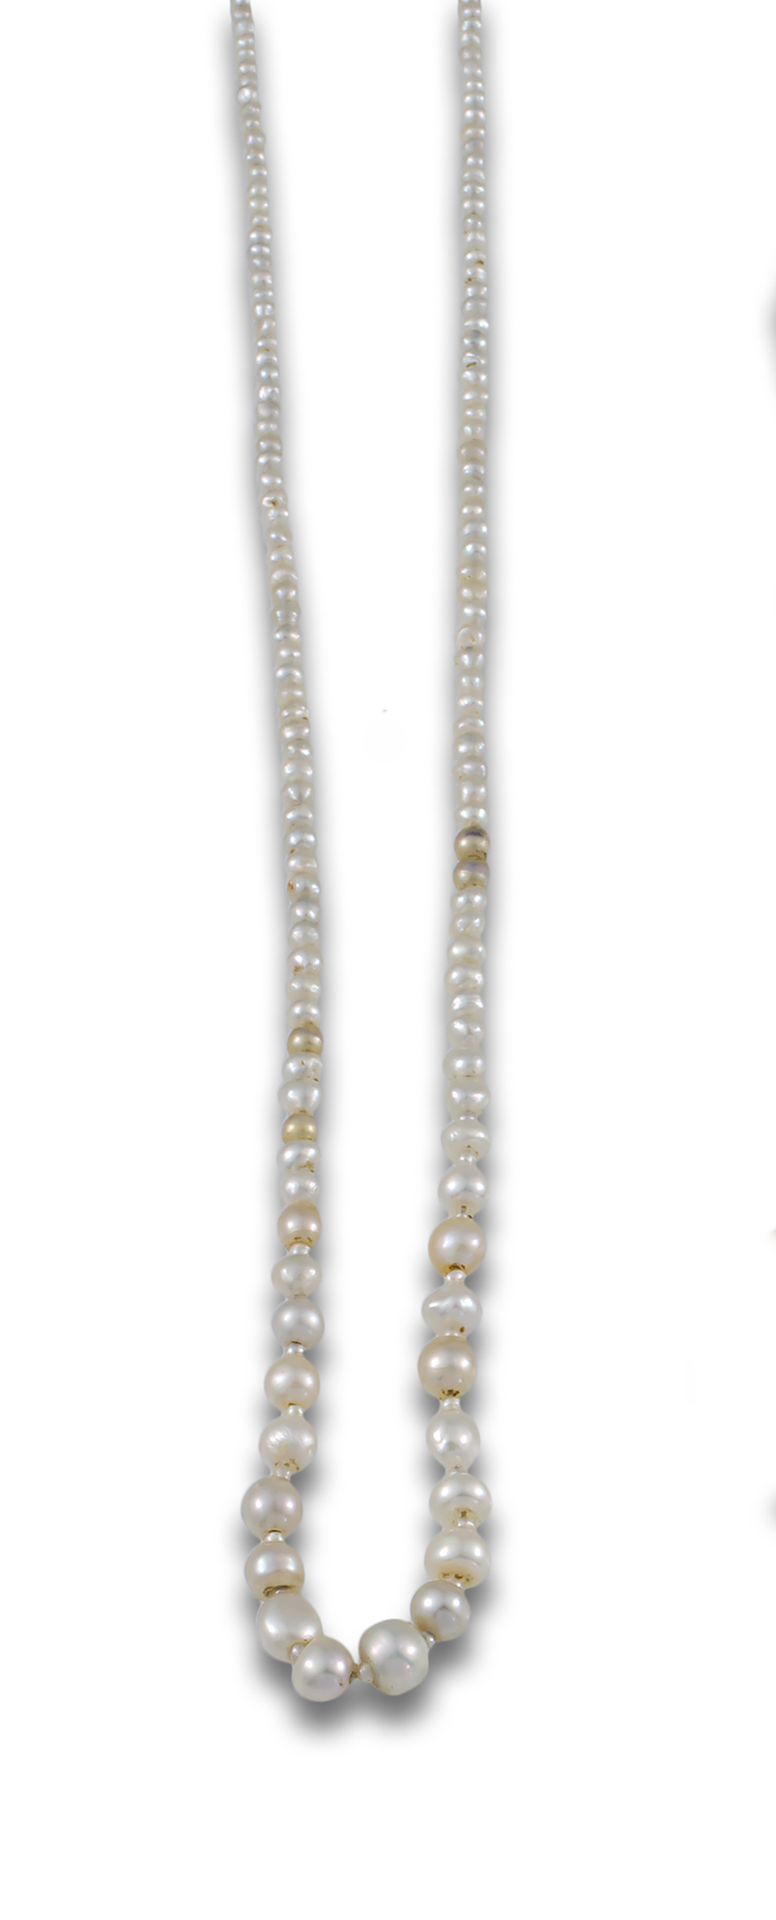 NECKLACE XIX PEARLS GOLD CLASP 项链，19世纪，养殖珍珠逐渐减少，18K黄金扣，镶有钻石 .